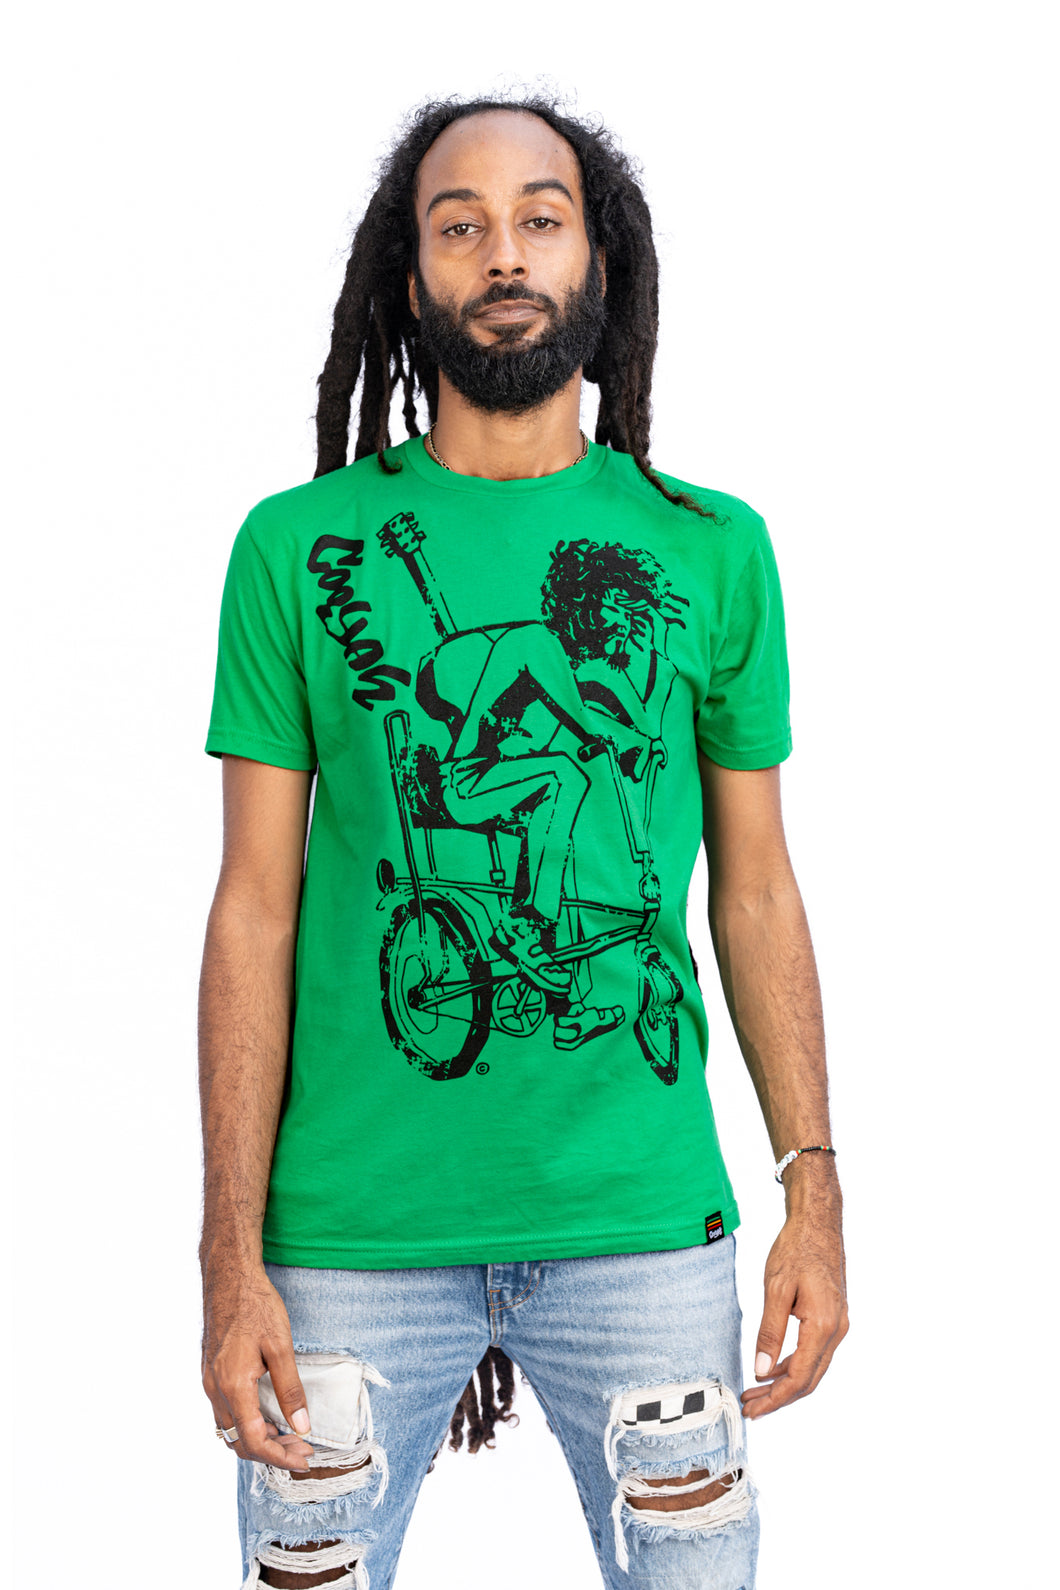 Cooyah Jamaica. Men's Simmer Down T-Shirt featuring a Rastaman on a bicycle design. Ring Spun Cotton, Short Sleeve Green Tee. Jamaican streetwear clothing brand.